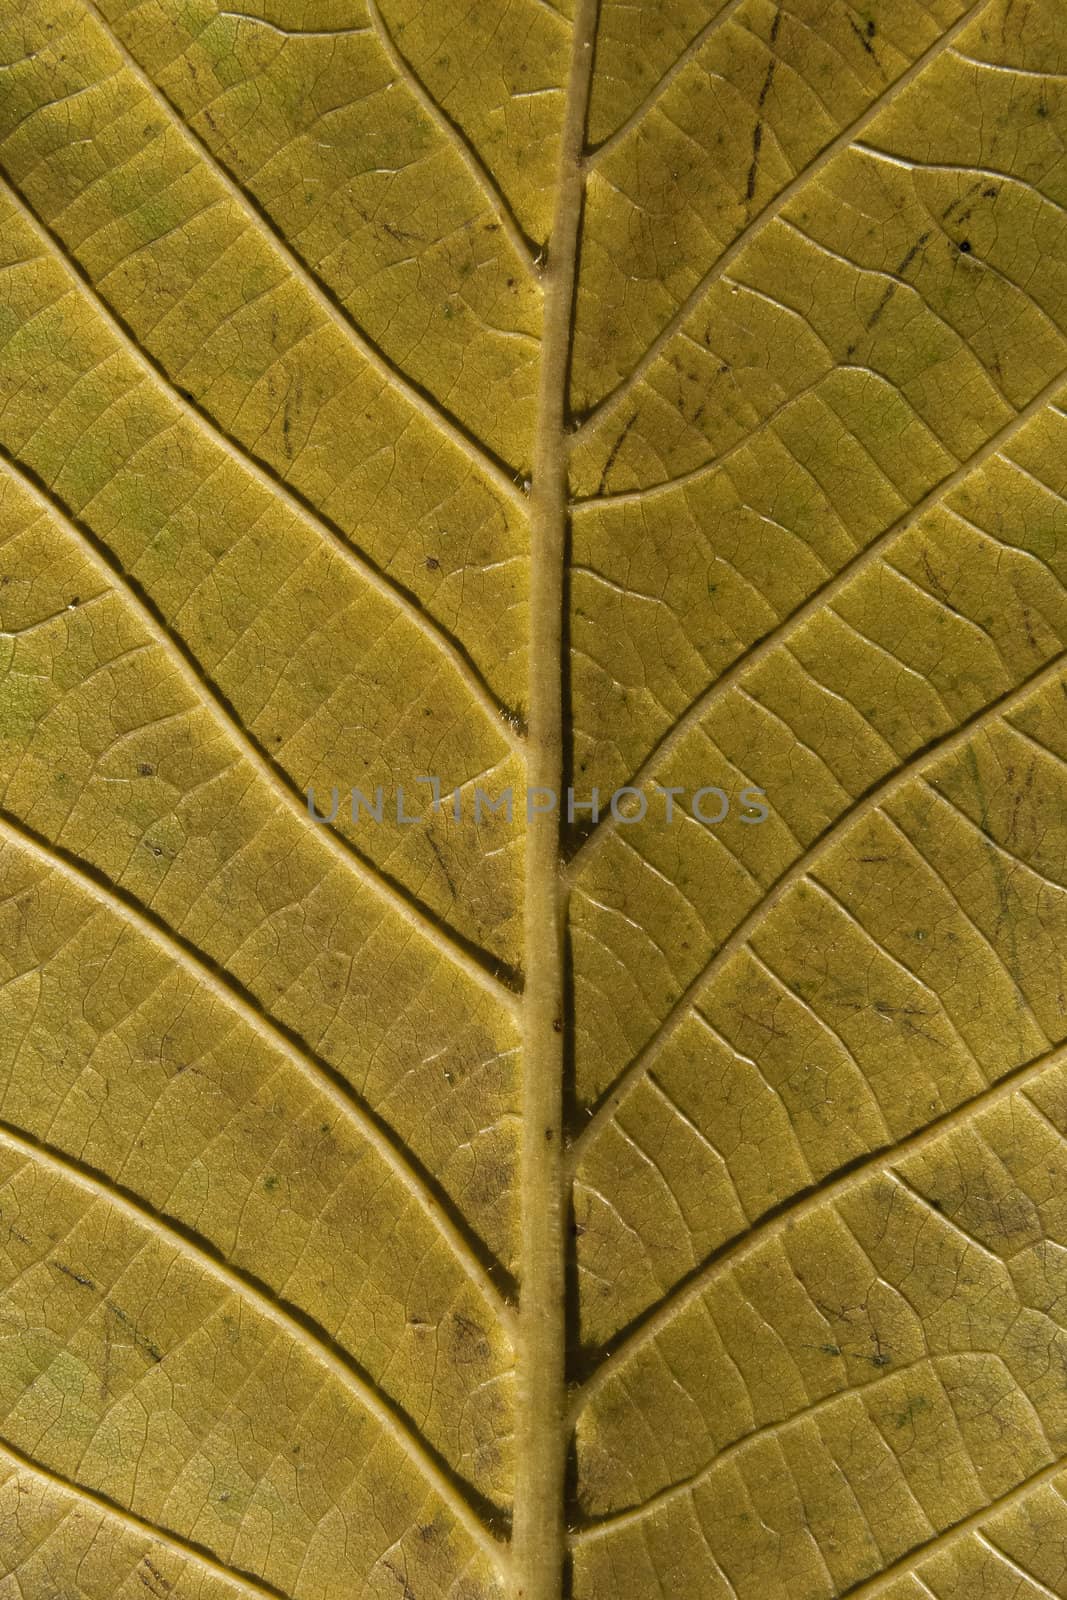 Autumn leaf vein structure underside green color as background